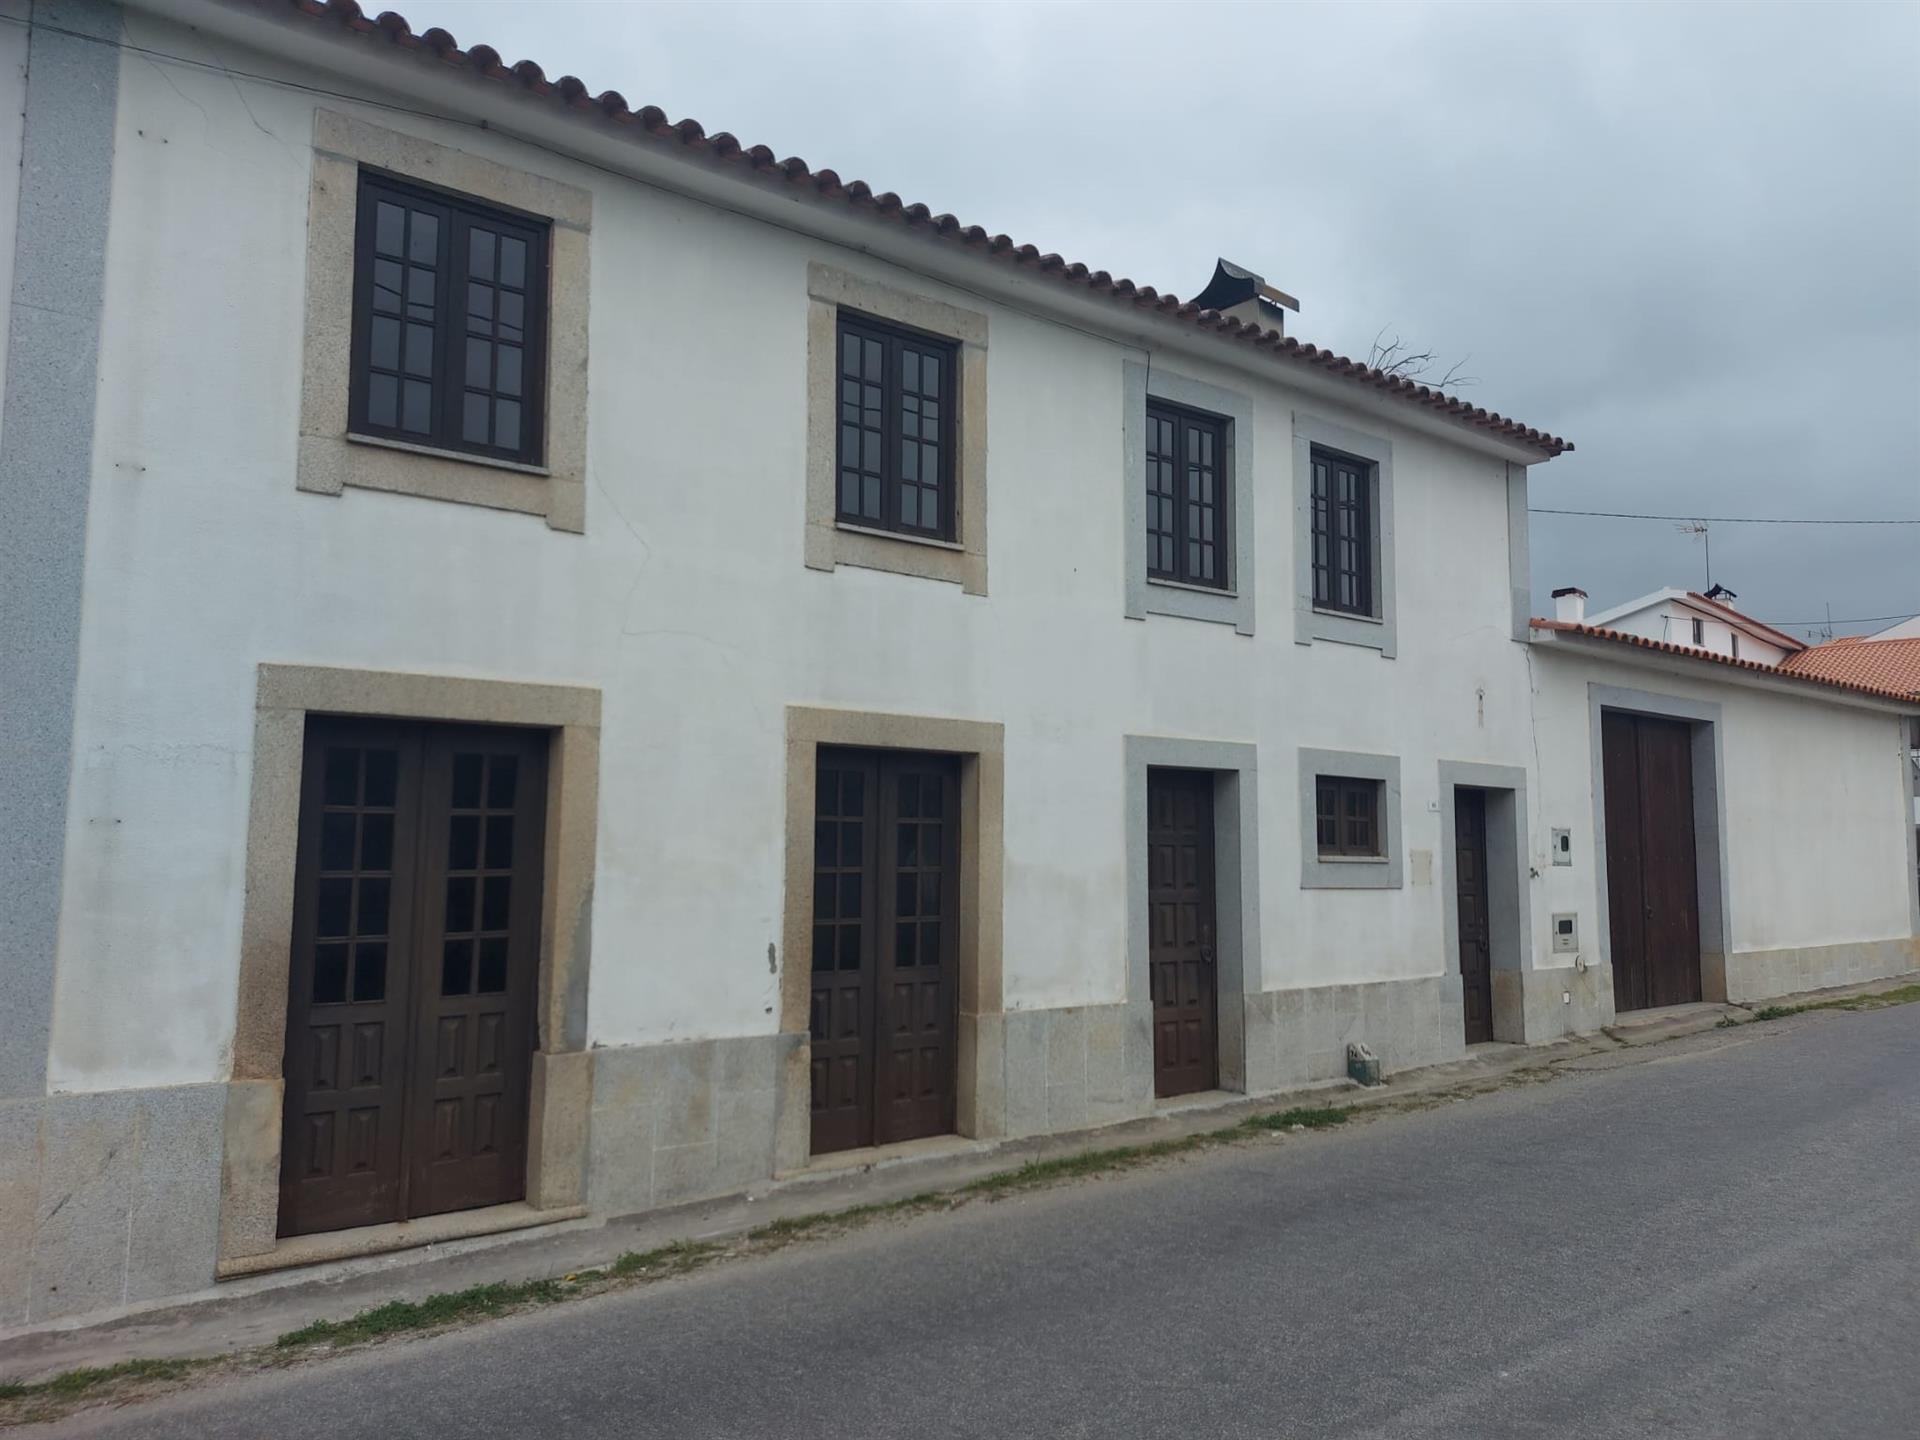 4 bedroom villa plus patio with 3 annexes in Mouronho